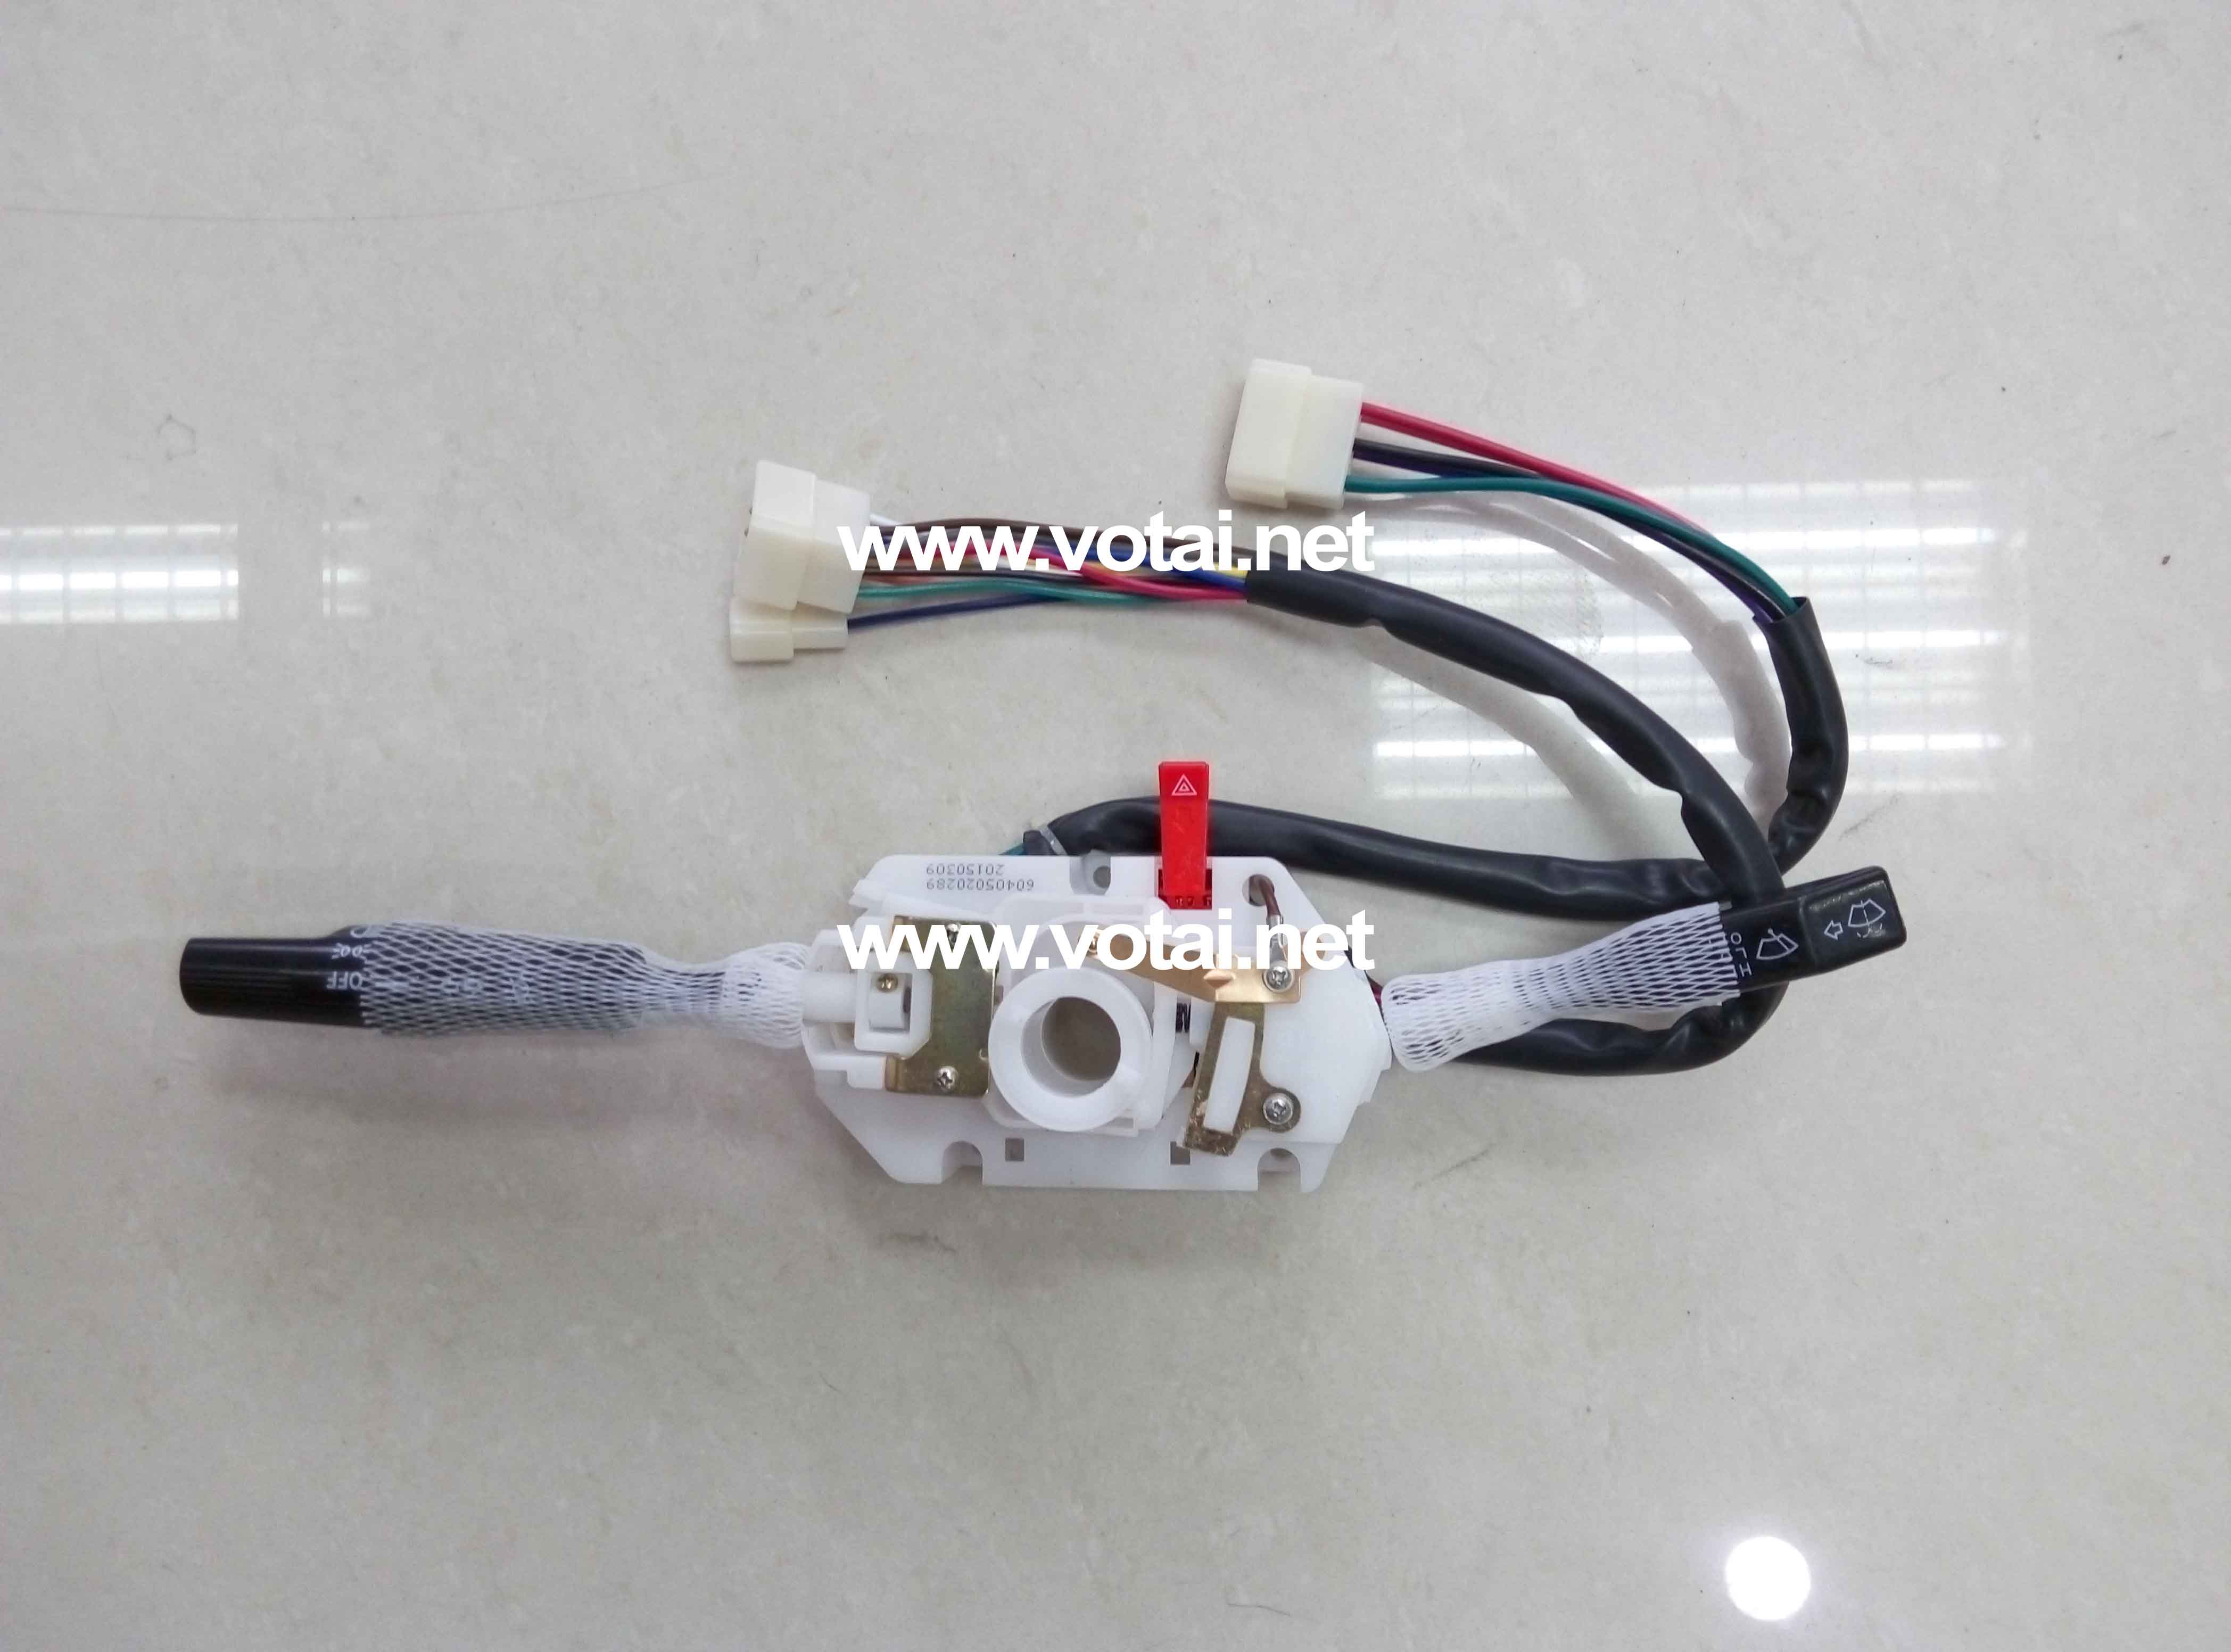 Tianjin Votai - Combined switch for CG956, Longking Wheel Loader Parts CDM816, CDM835E, CDM853, CDM855E, CDM856E, CDM860 spare parts